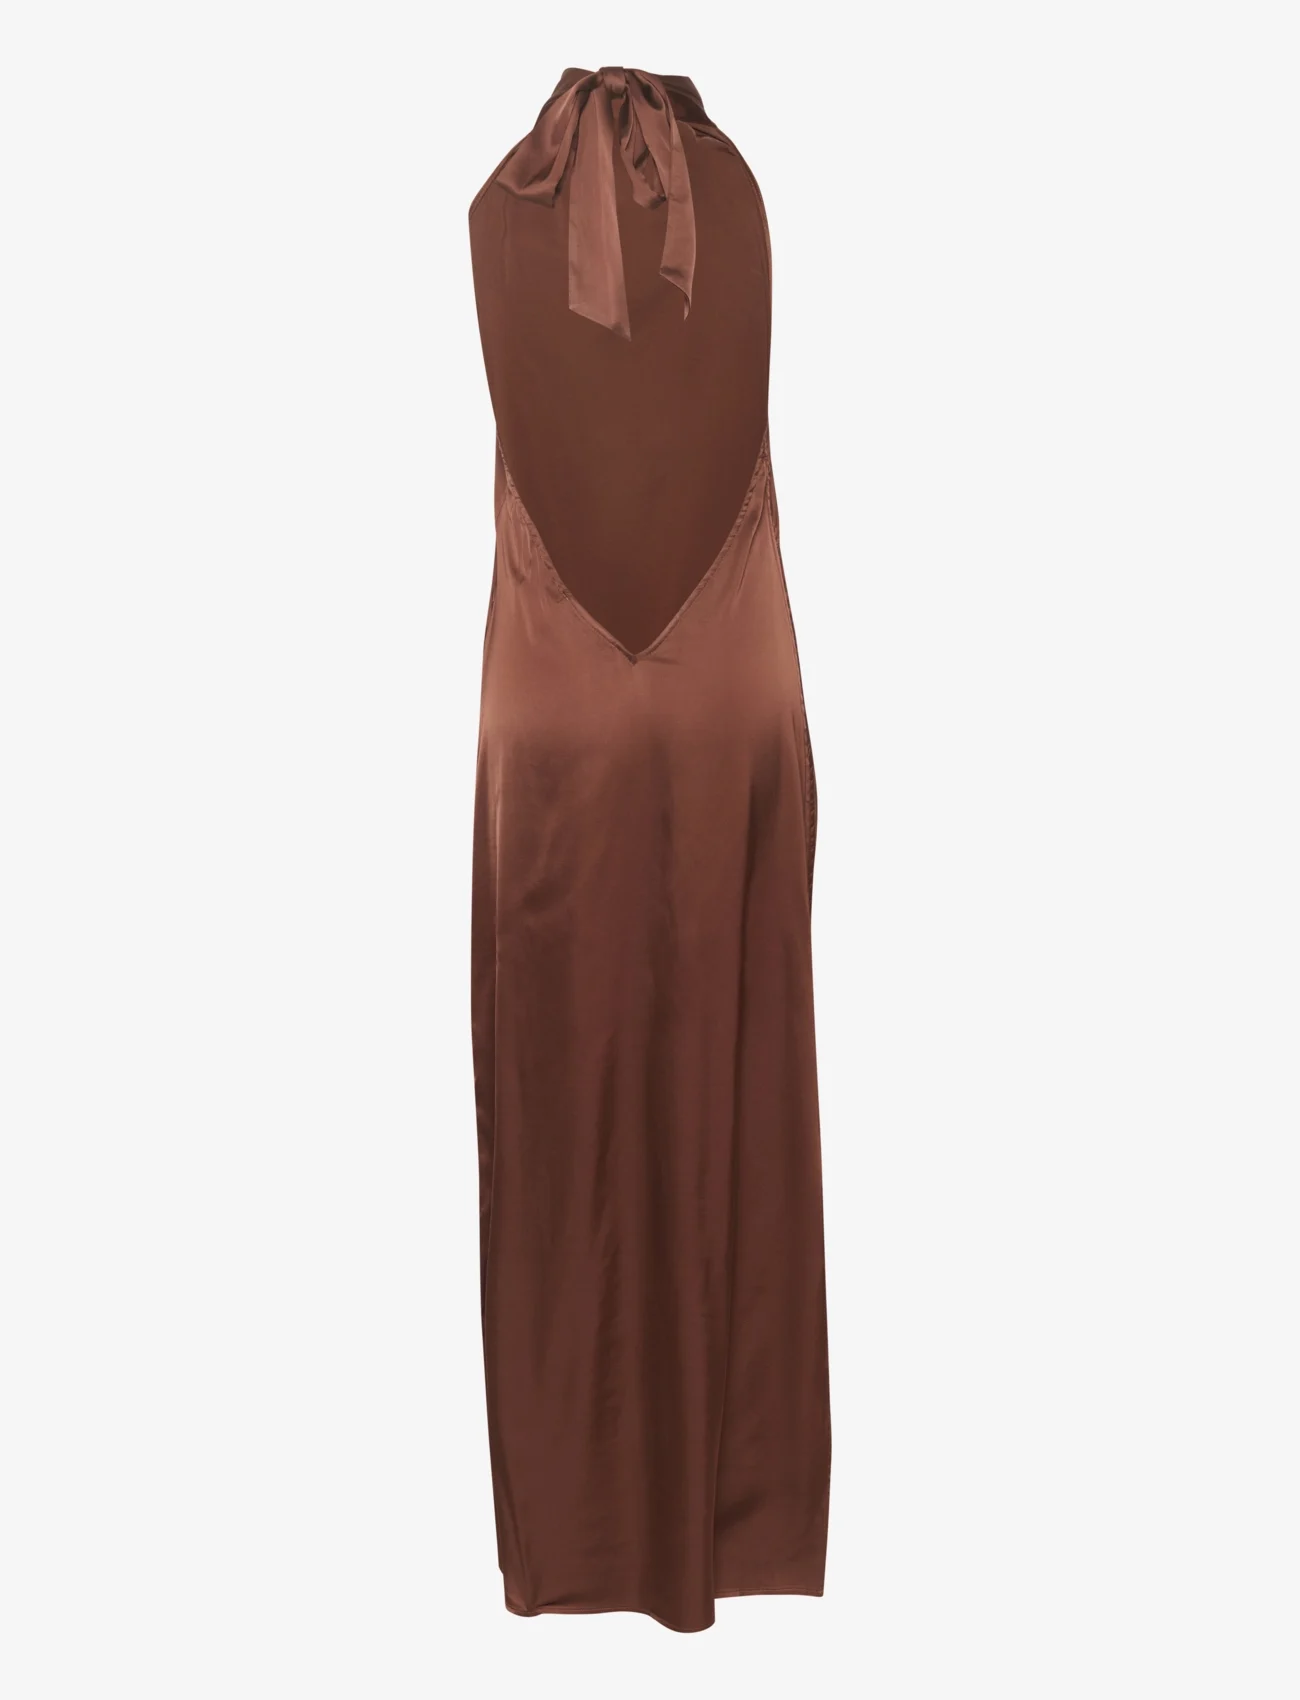 Gestuz - WaleryGZ maxi dress - sukienki na ramiączkach - desert brown - 1